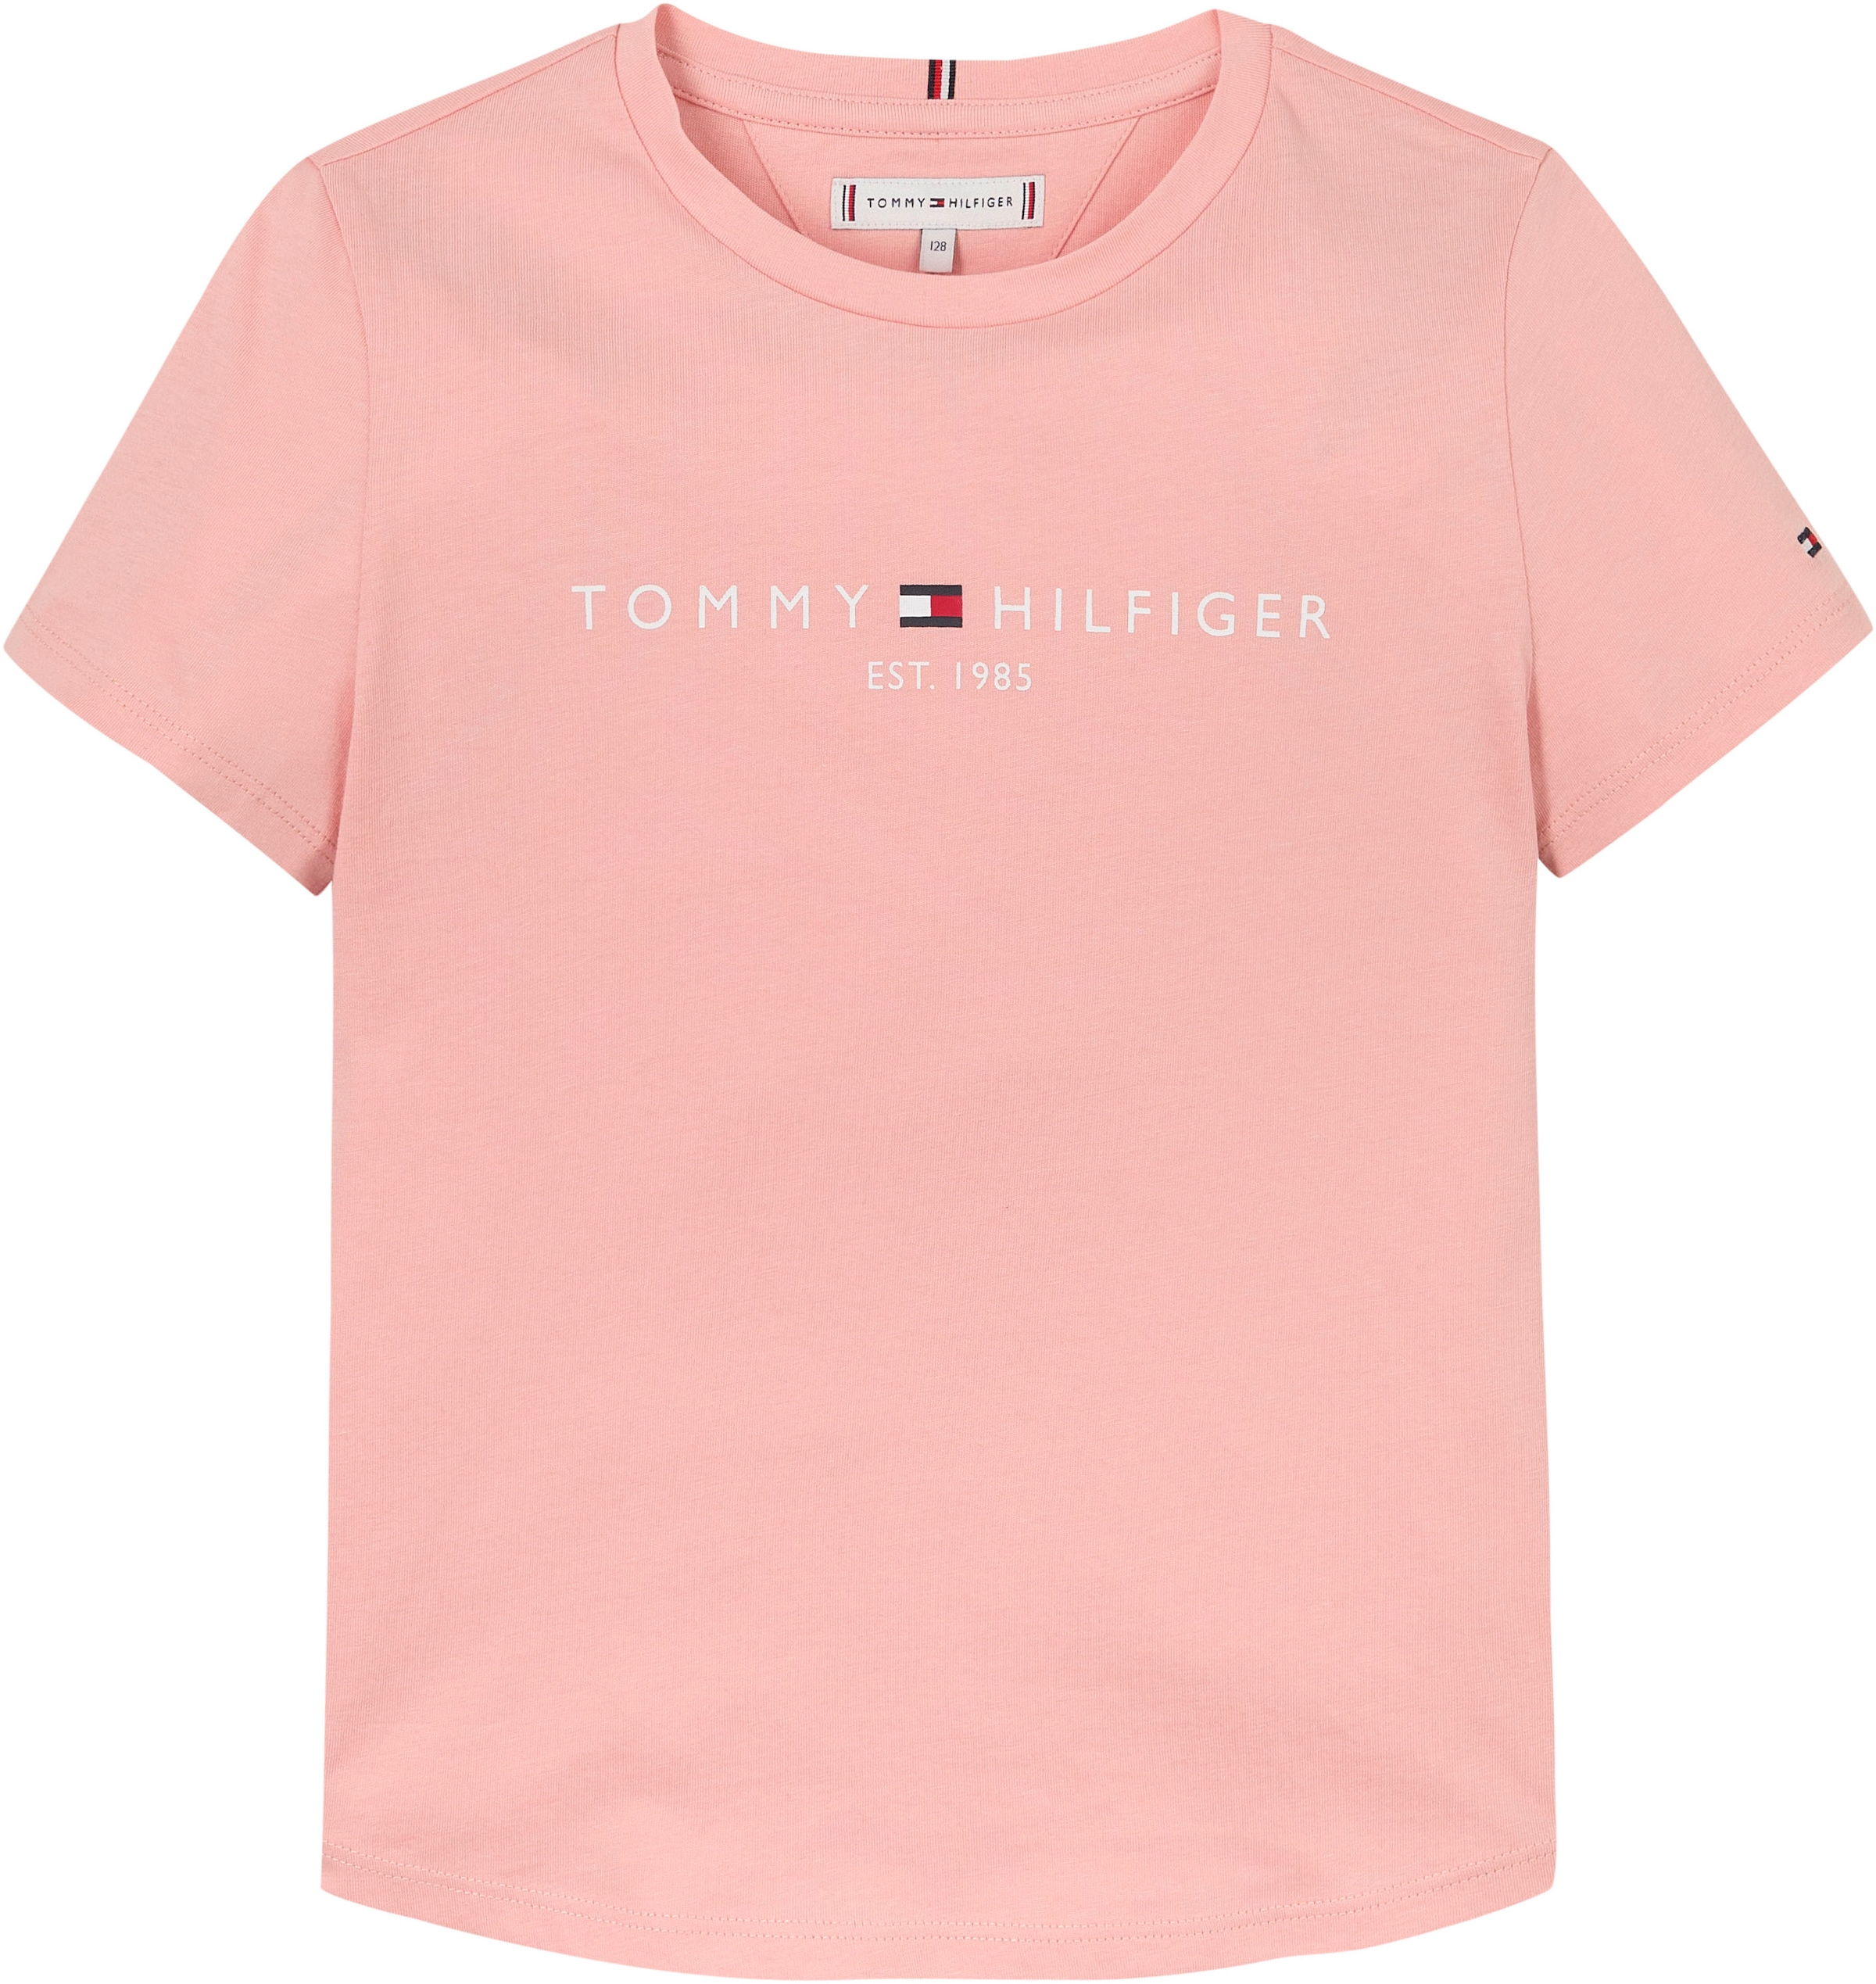 Tommy Hilfiger Kurzarmshirt »ESSENTIAL TEE S/S«, mit Tommy Hilfiger Logoschriftzug